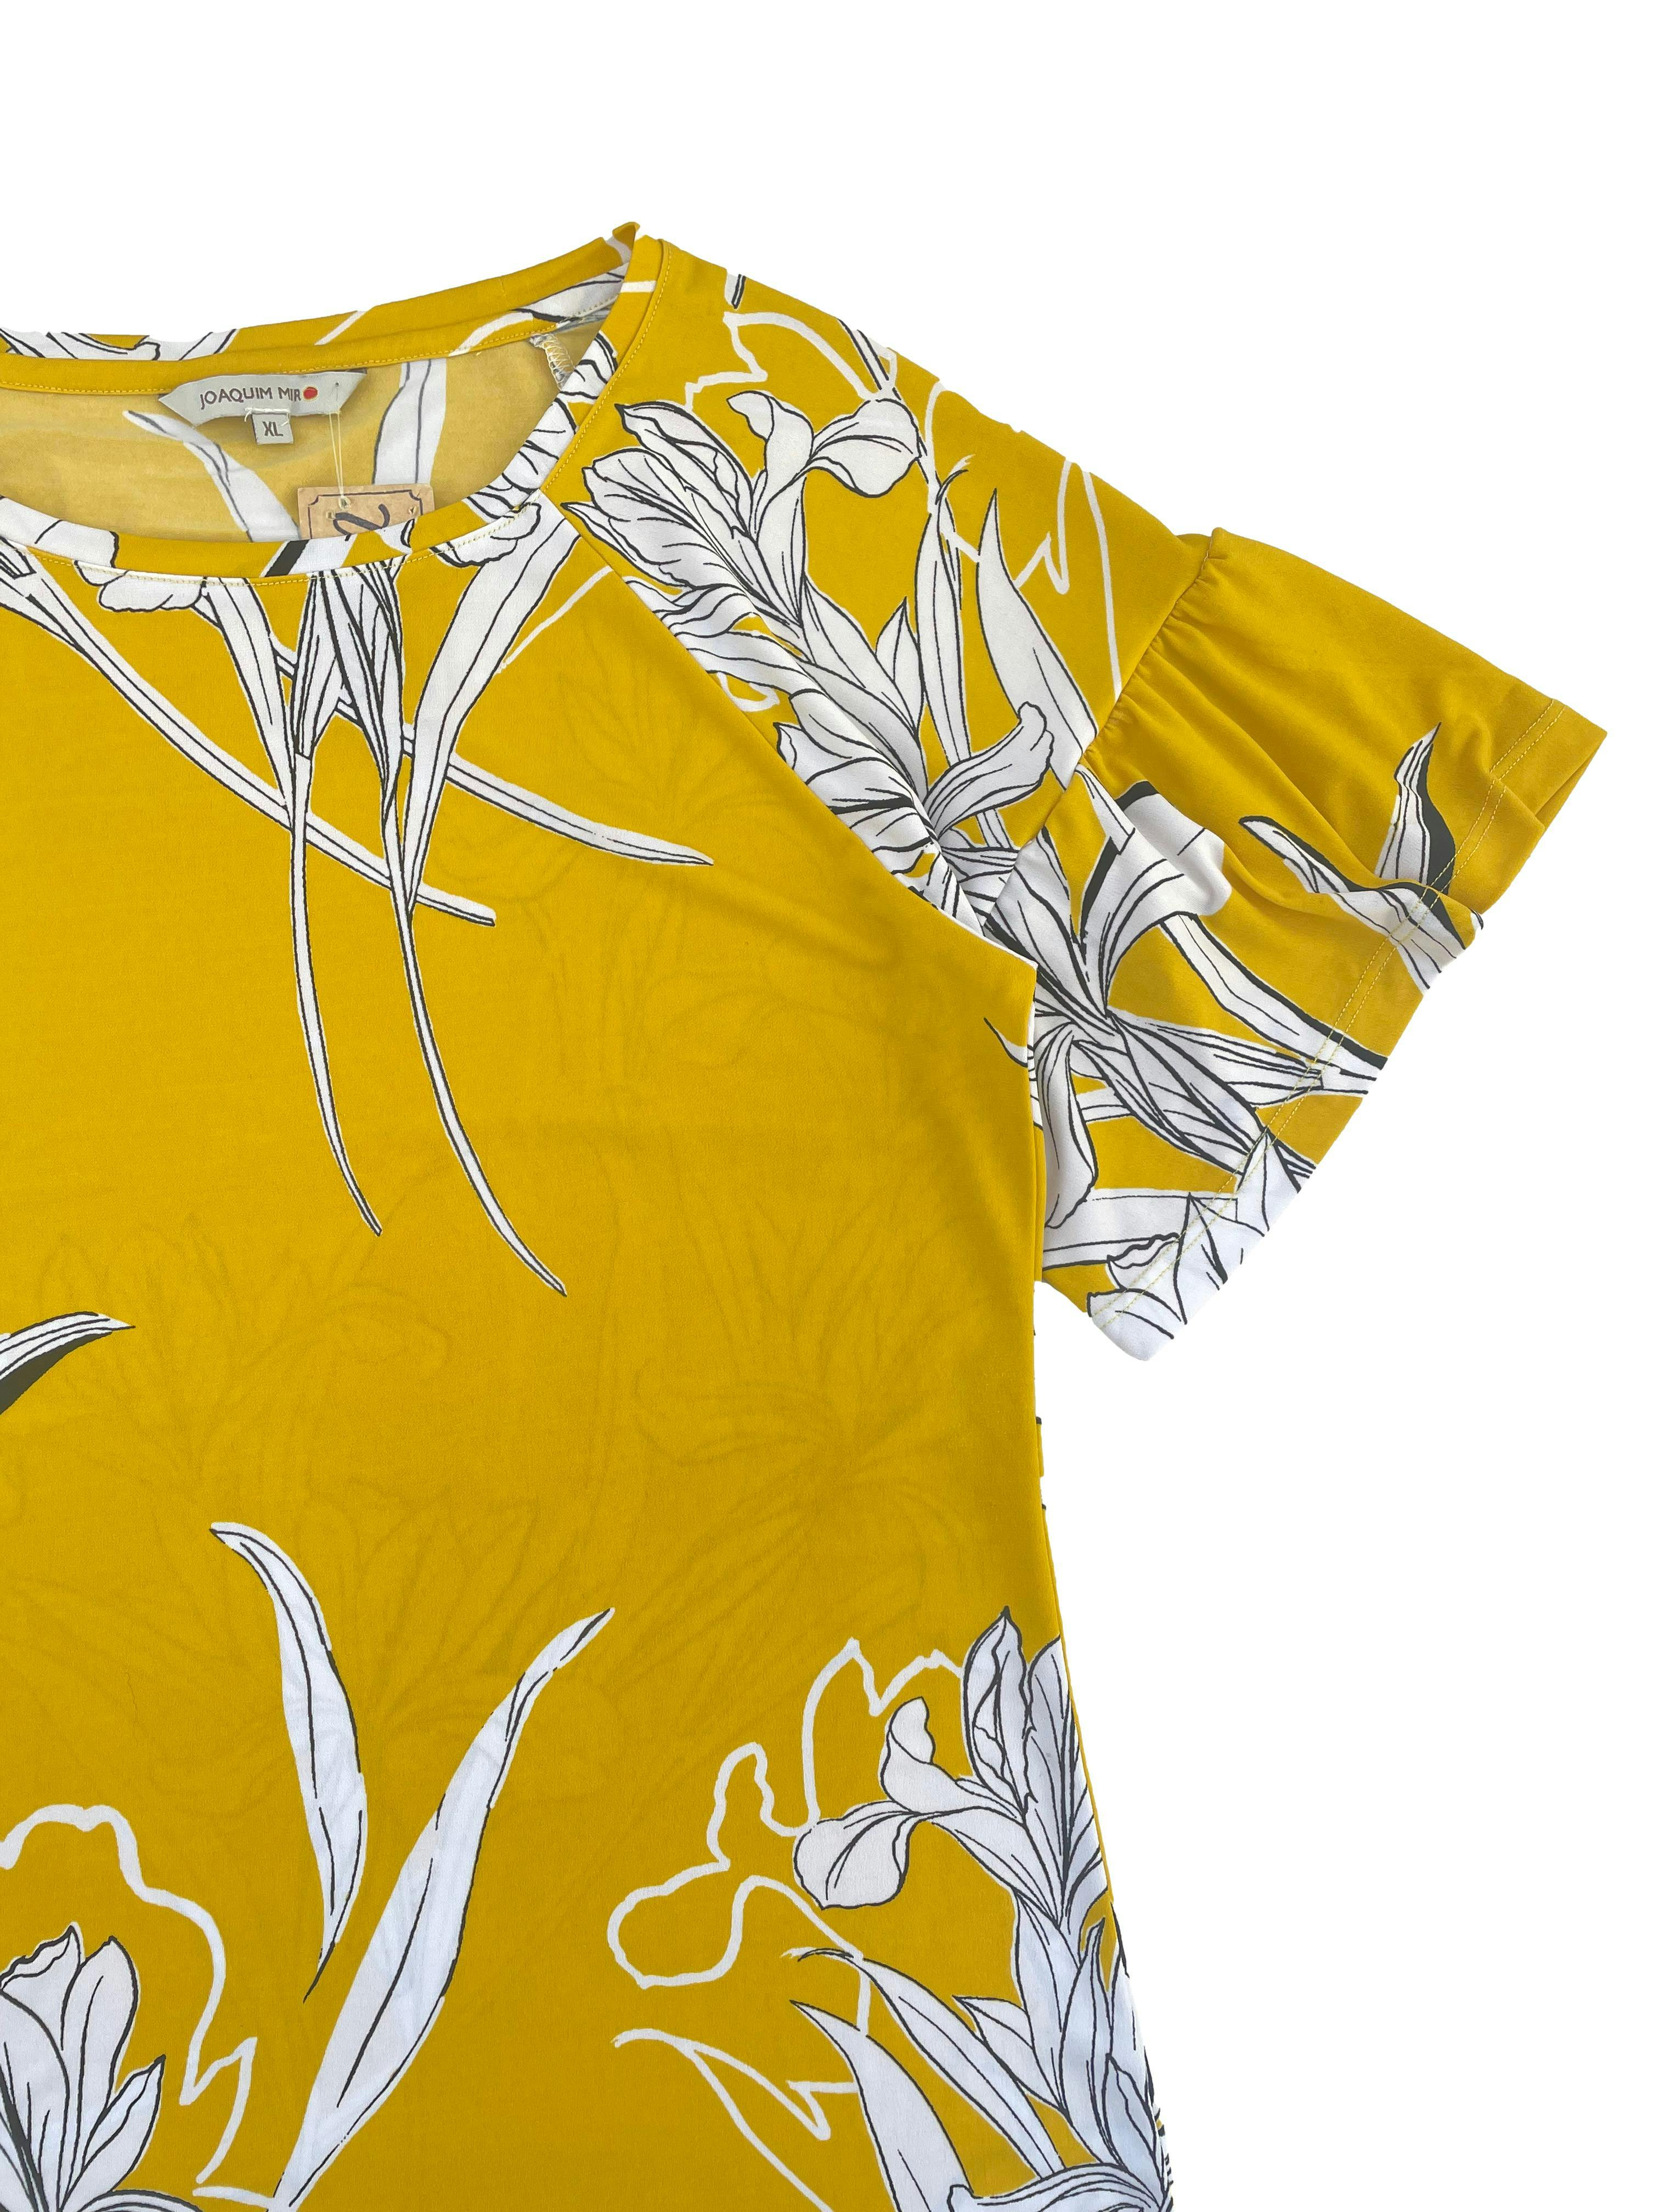 Polo Joaquim Miro amarillo con flores estilo dibujo blanco y negro, manga corta con volante, tela stretch. Busto 105cm sin estirar Largo 63cm. Precio original S/ 169